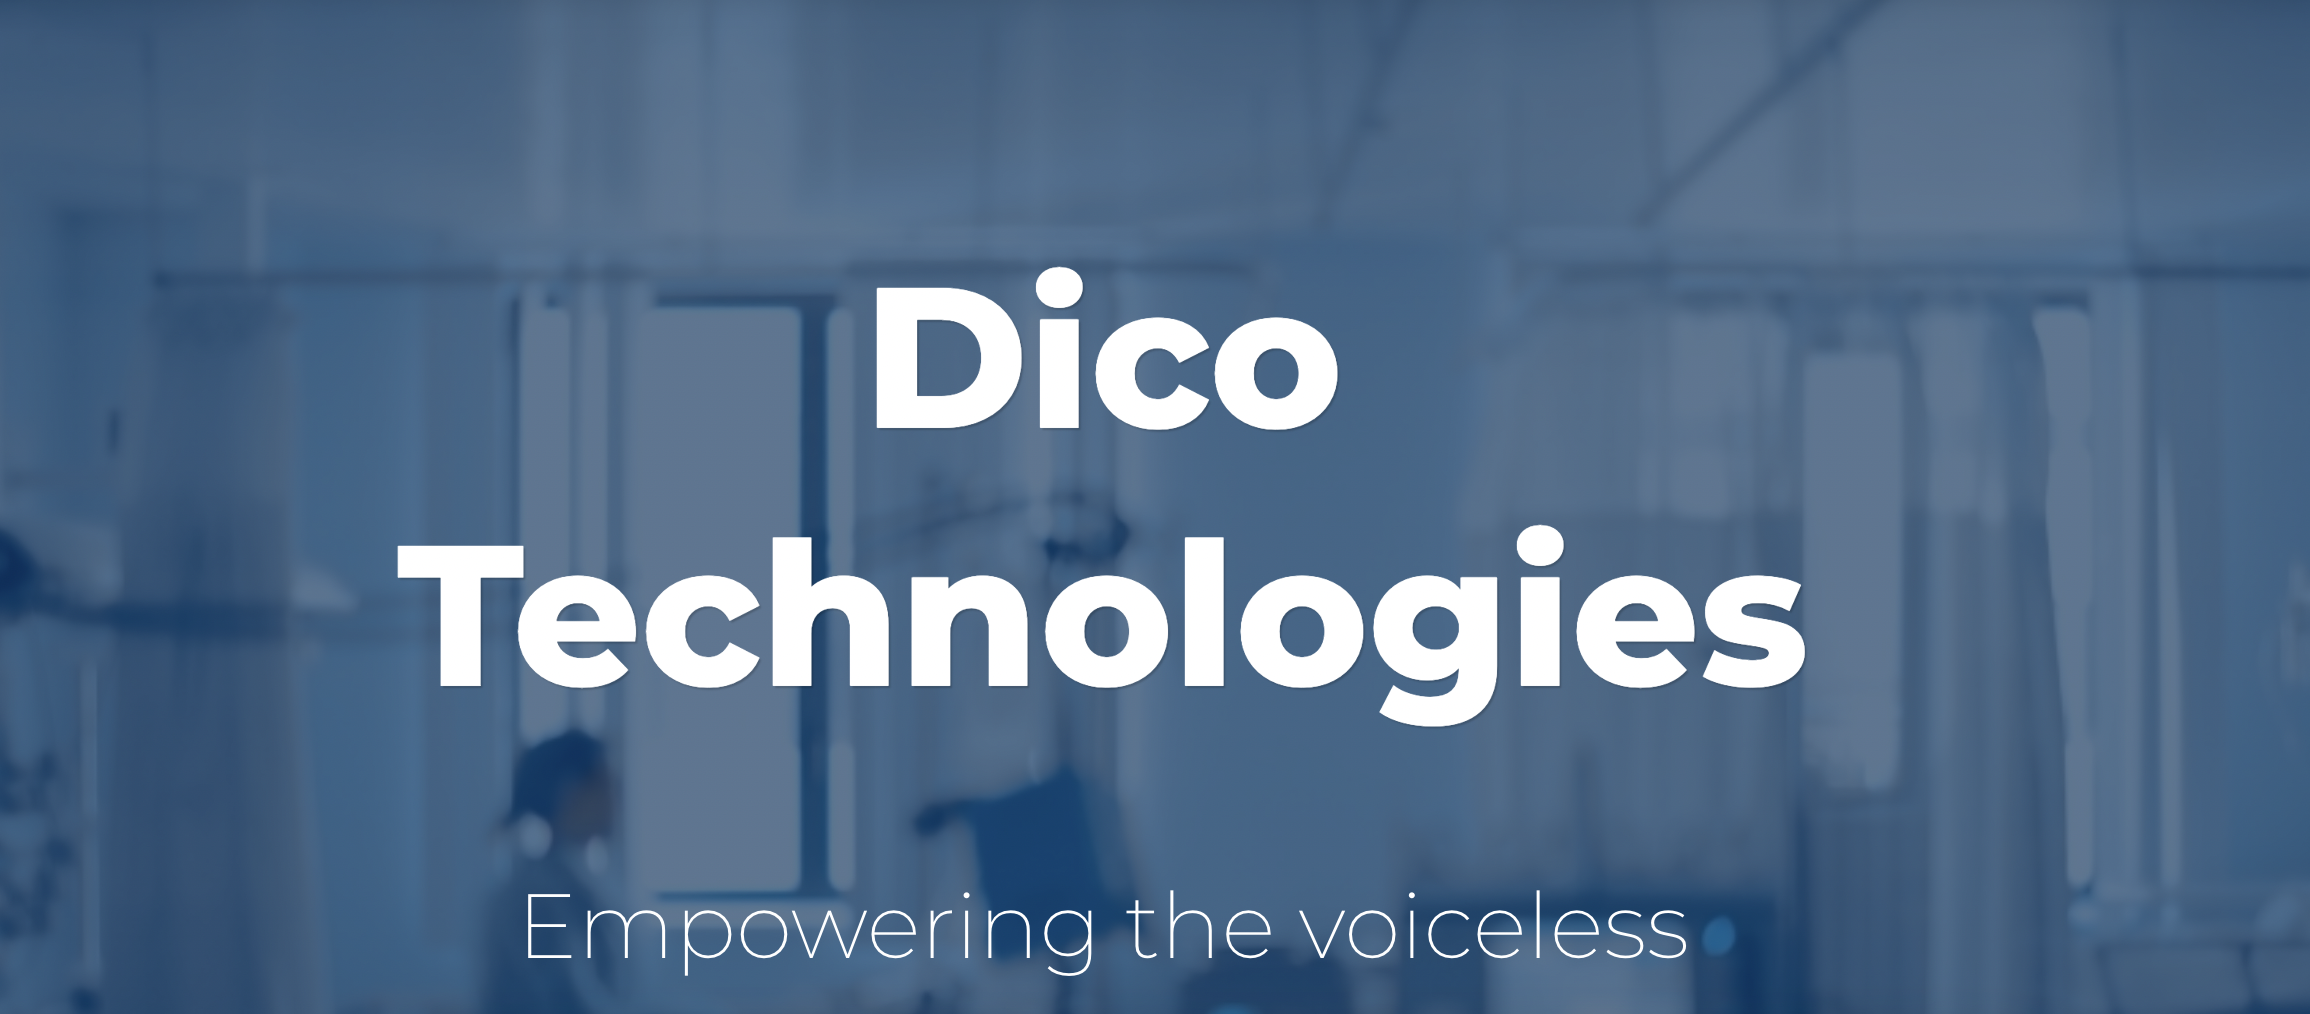 Dico technologies